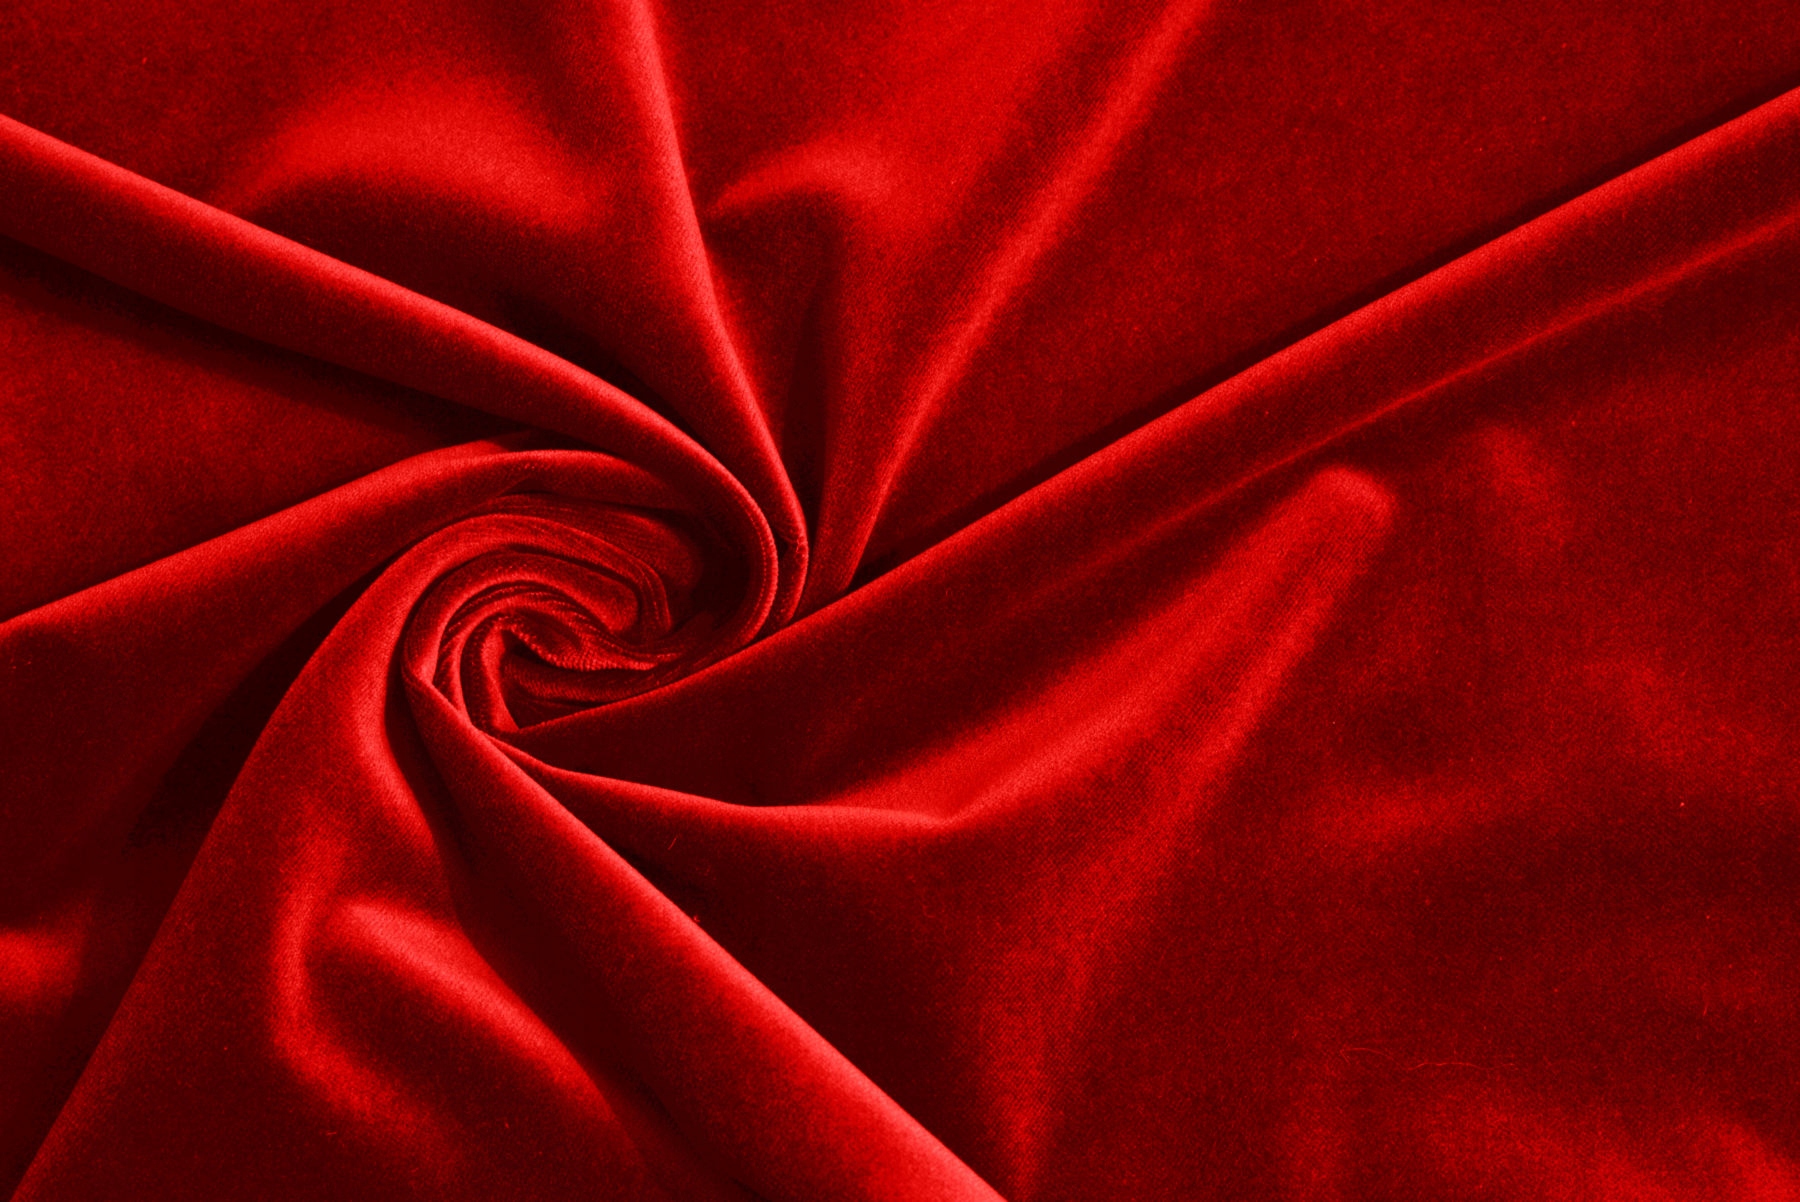 Бархатный хлопок. Бархат бордо. Бархатная ткань. Красный бархат ткань. Красная бархатная ткань.